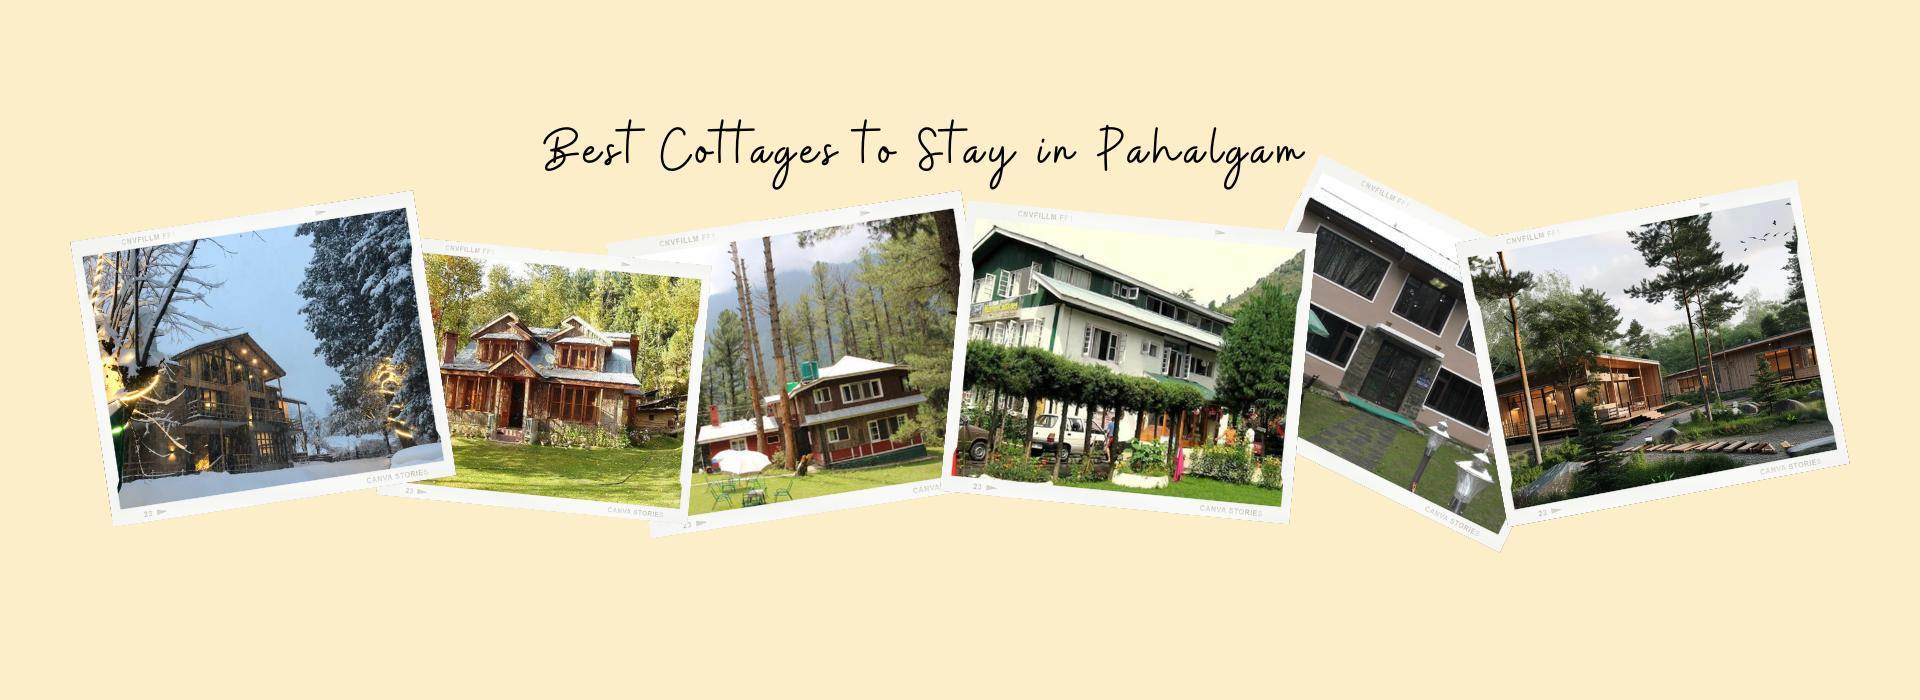 Best Cottages to Stay in Pahalgam kashmirhills.com